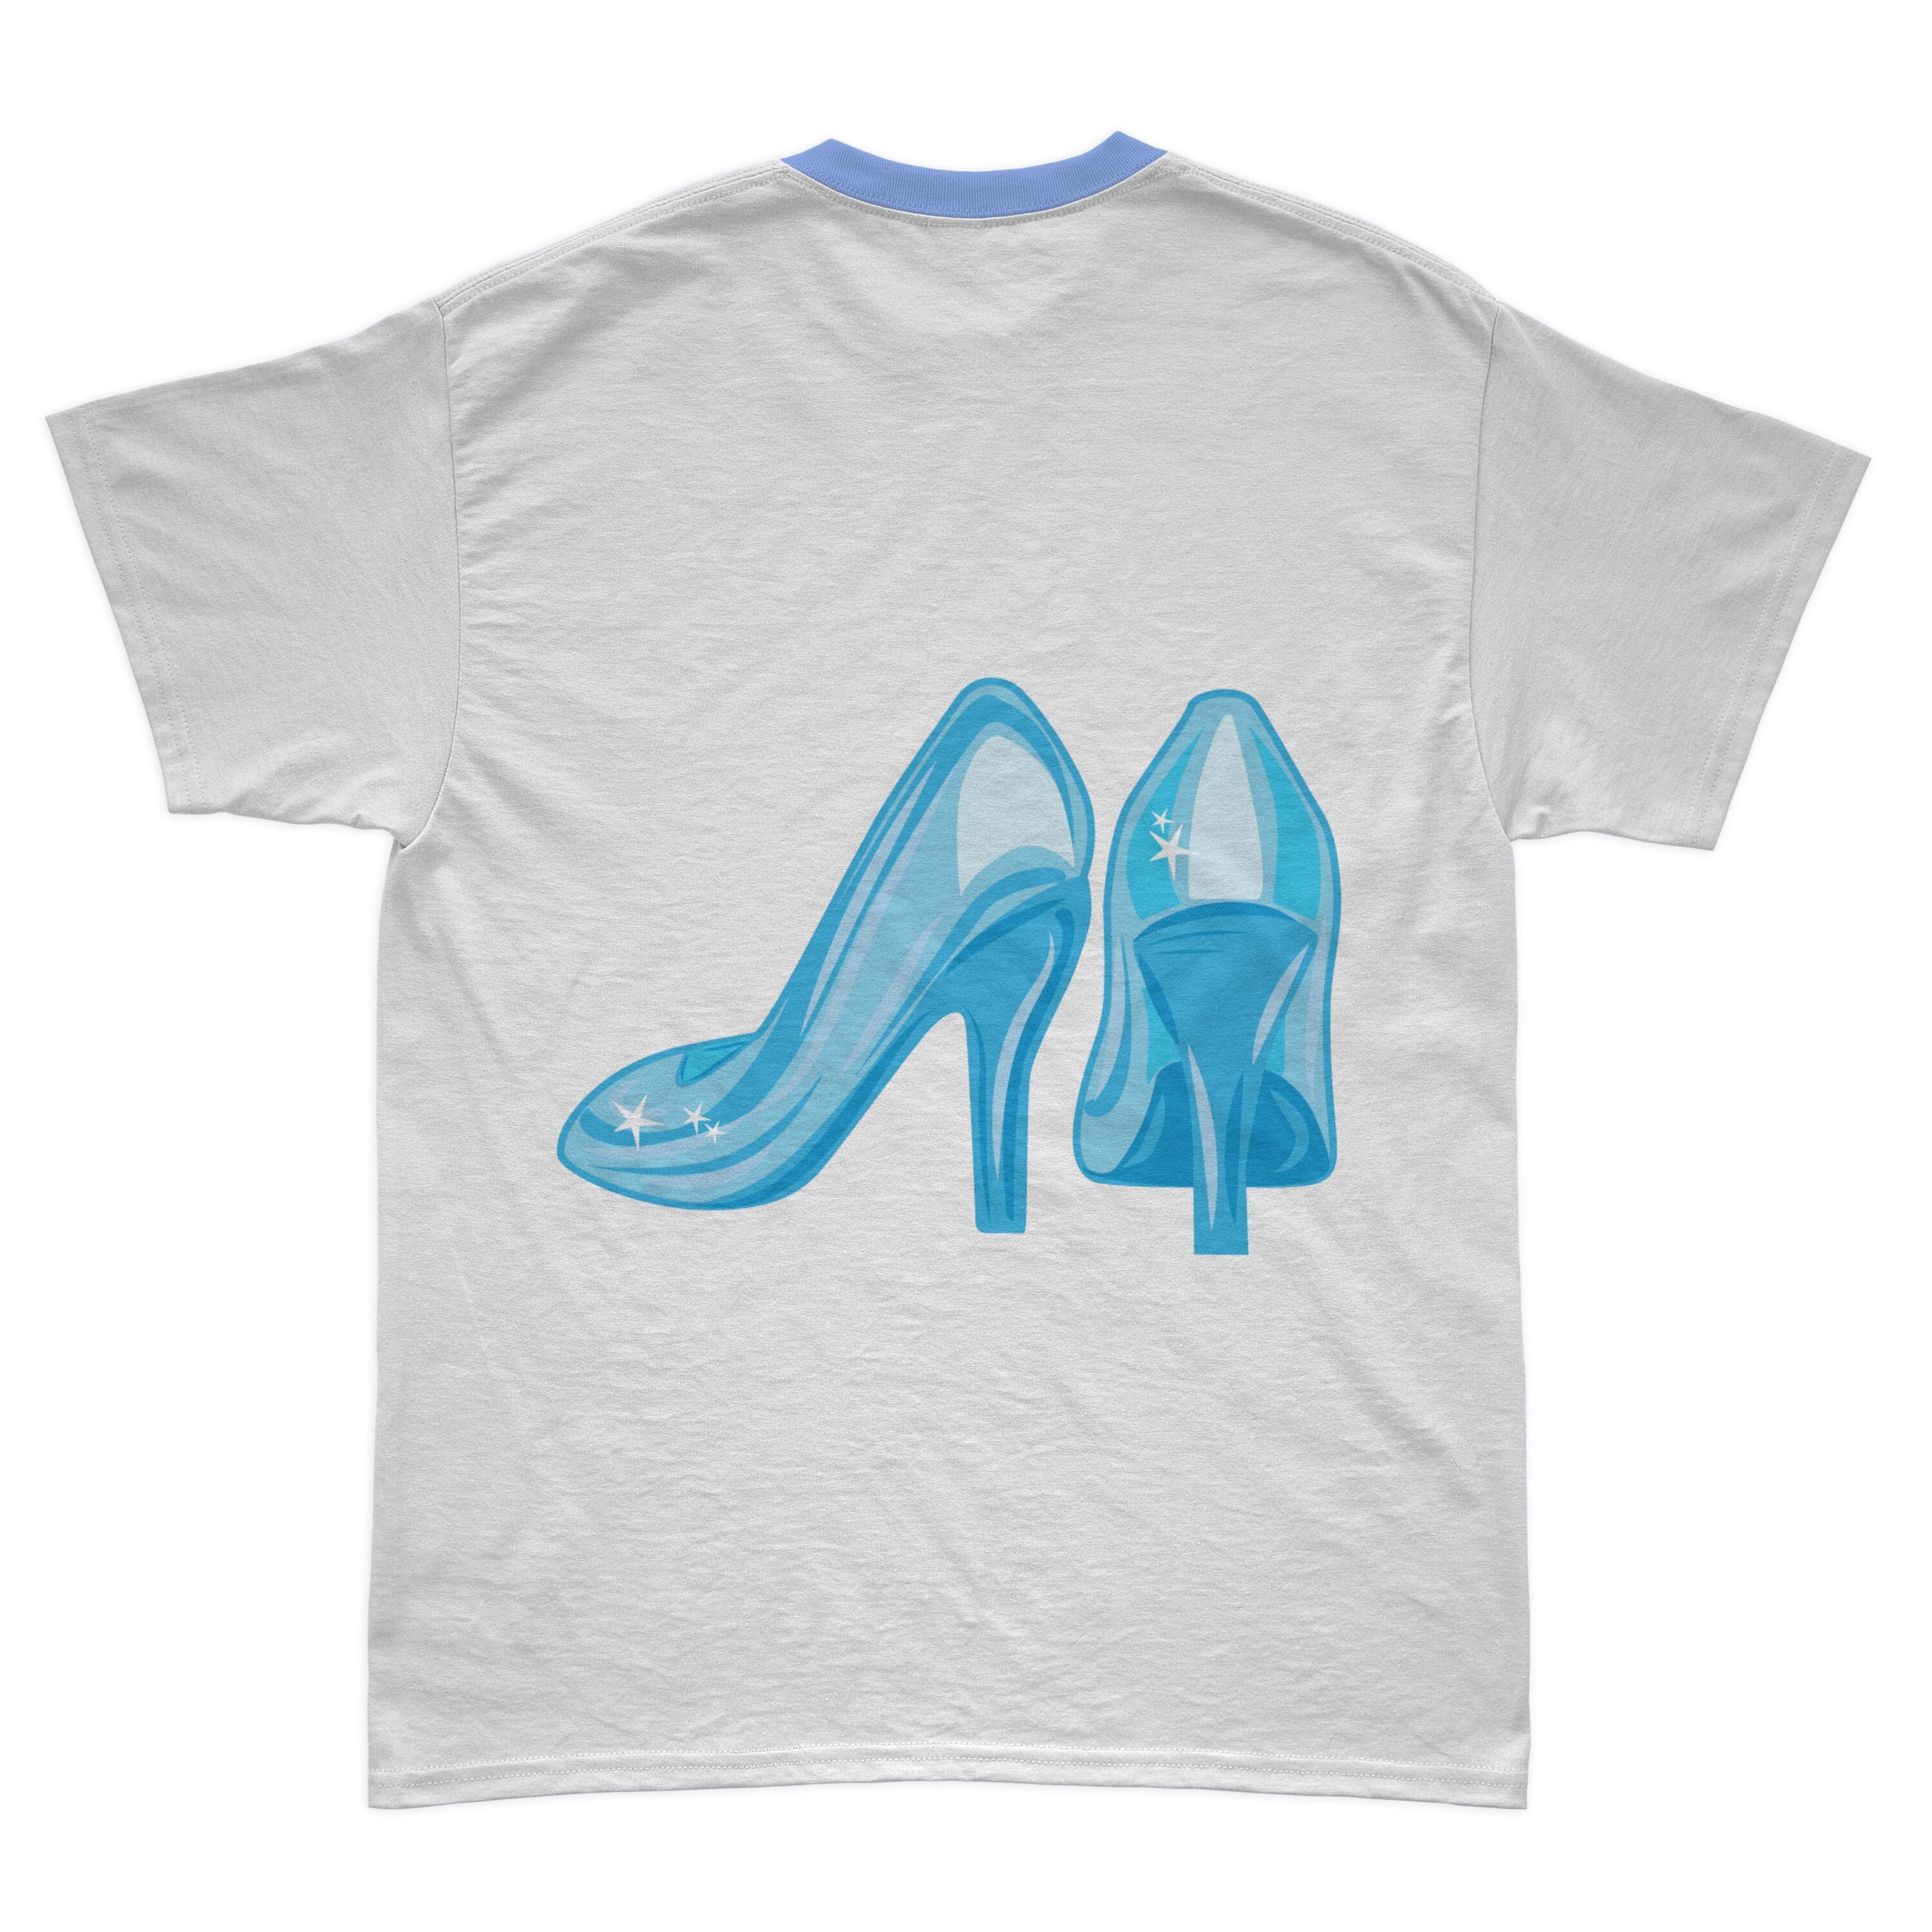 Cinderella Shoe SVG T-Shirt Designs Bundle – MasterBundles